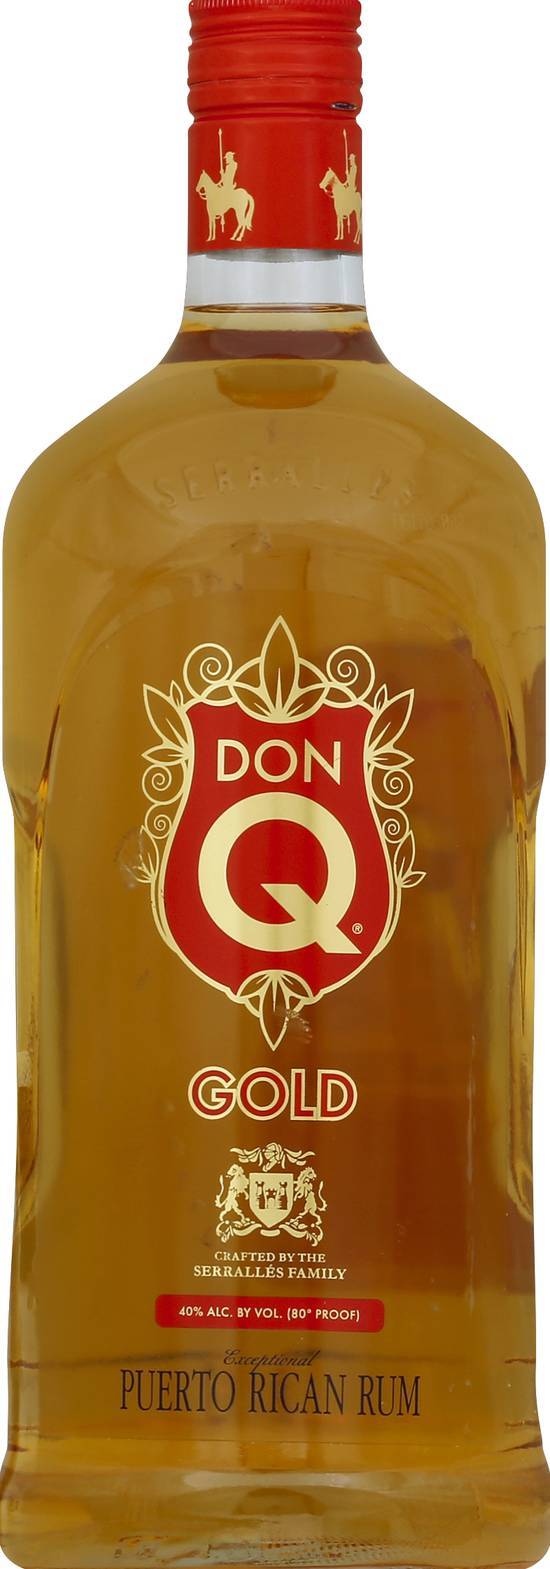 Don Q Gold Puerto Rican Rum (1.75 L)